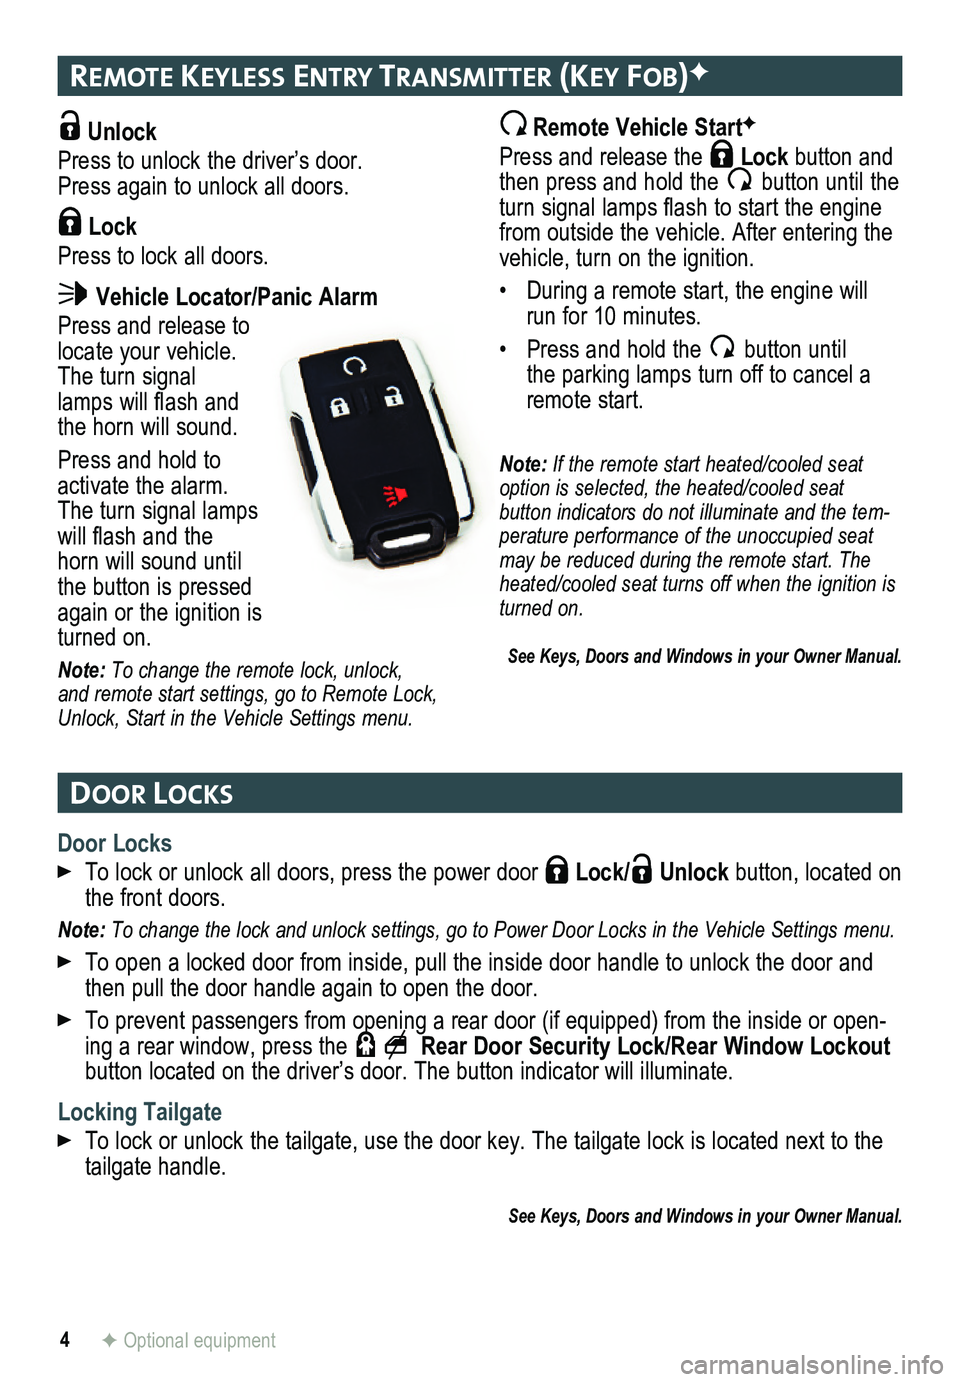 GMC SIERRA HD 2015  Get To Know Guide 4
remote Keyless entry transmI tter (Key Fob)F
Door locKs
F Optional equipment
Door Locks
 To lock or unlock all doors, press the power door  Lock/ Unlock button, located on the front doors.
Note: To 